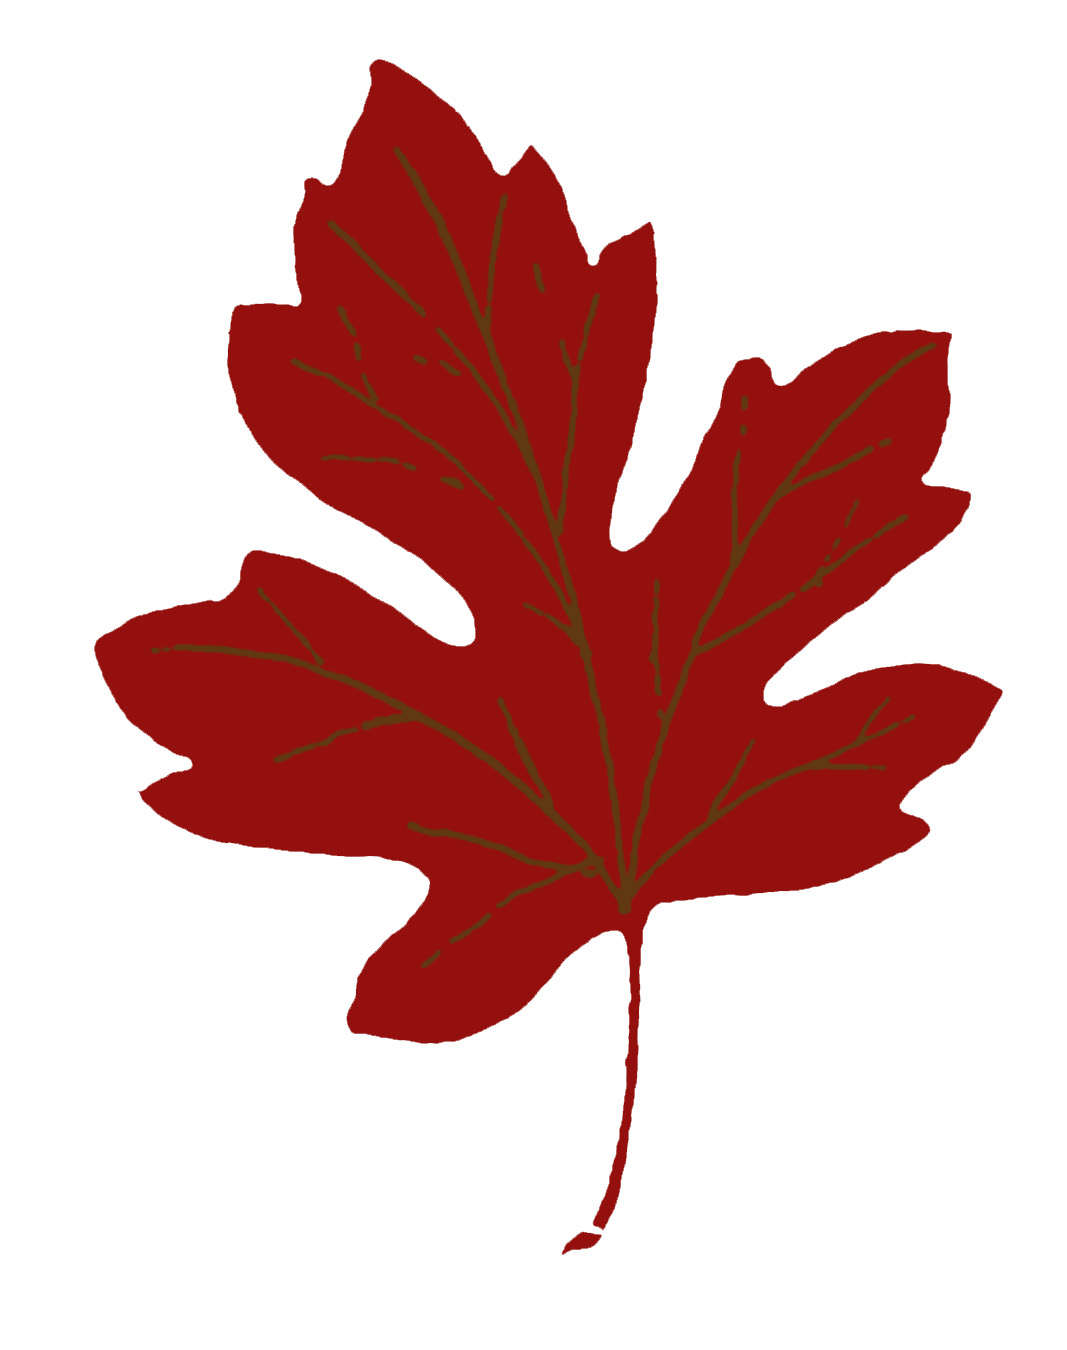 clip art fall leaf - Clip Art Library